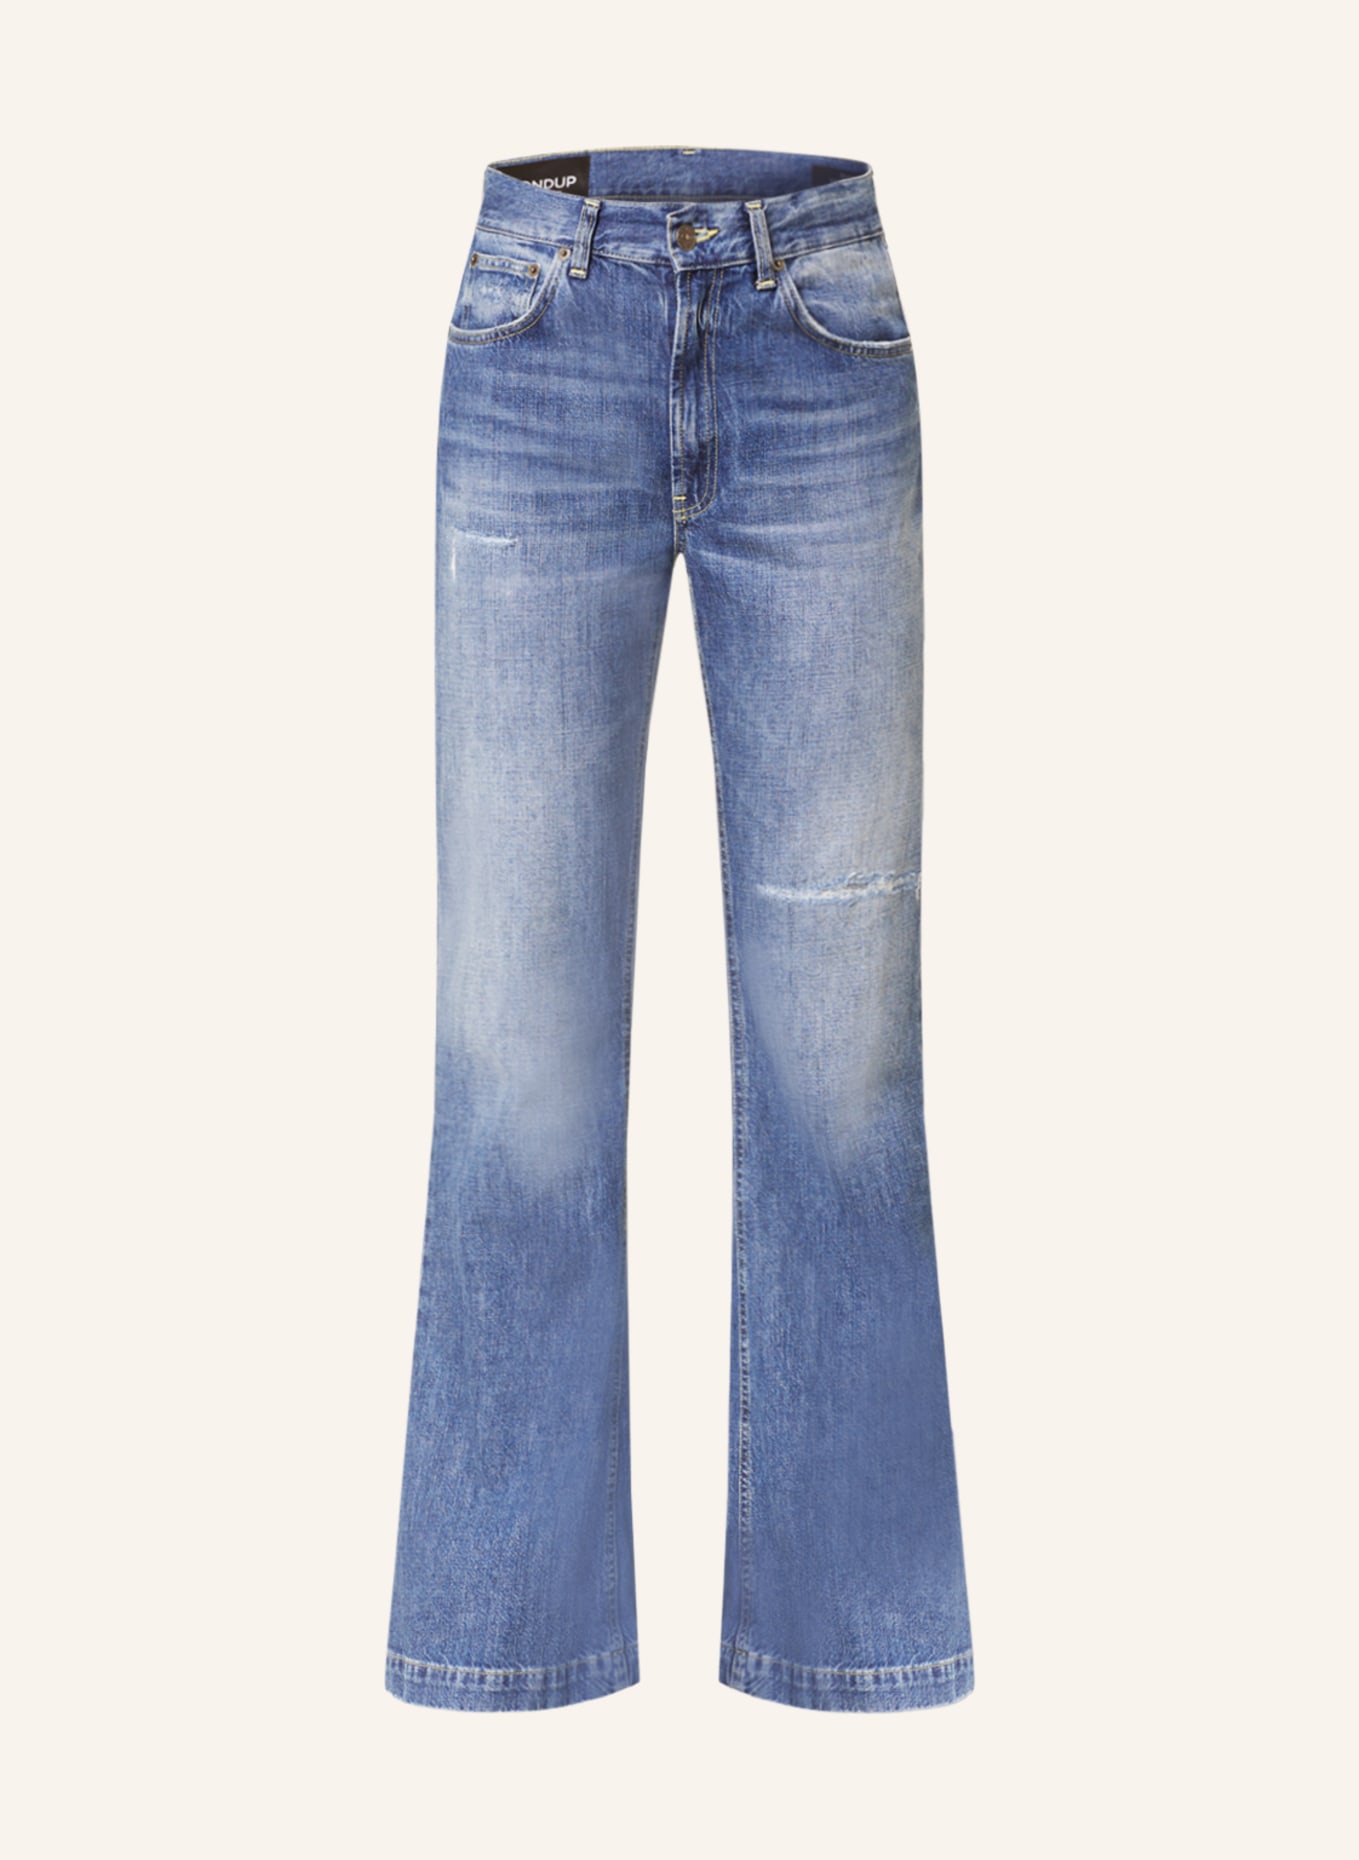 Dondup Flared Jeans OLIVIA, Farbe: GI9 800 blau denim (Bild 1)